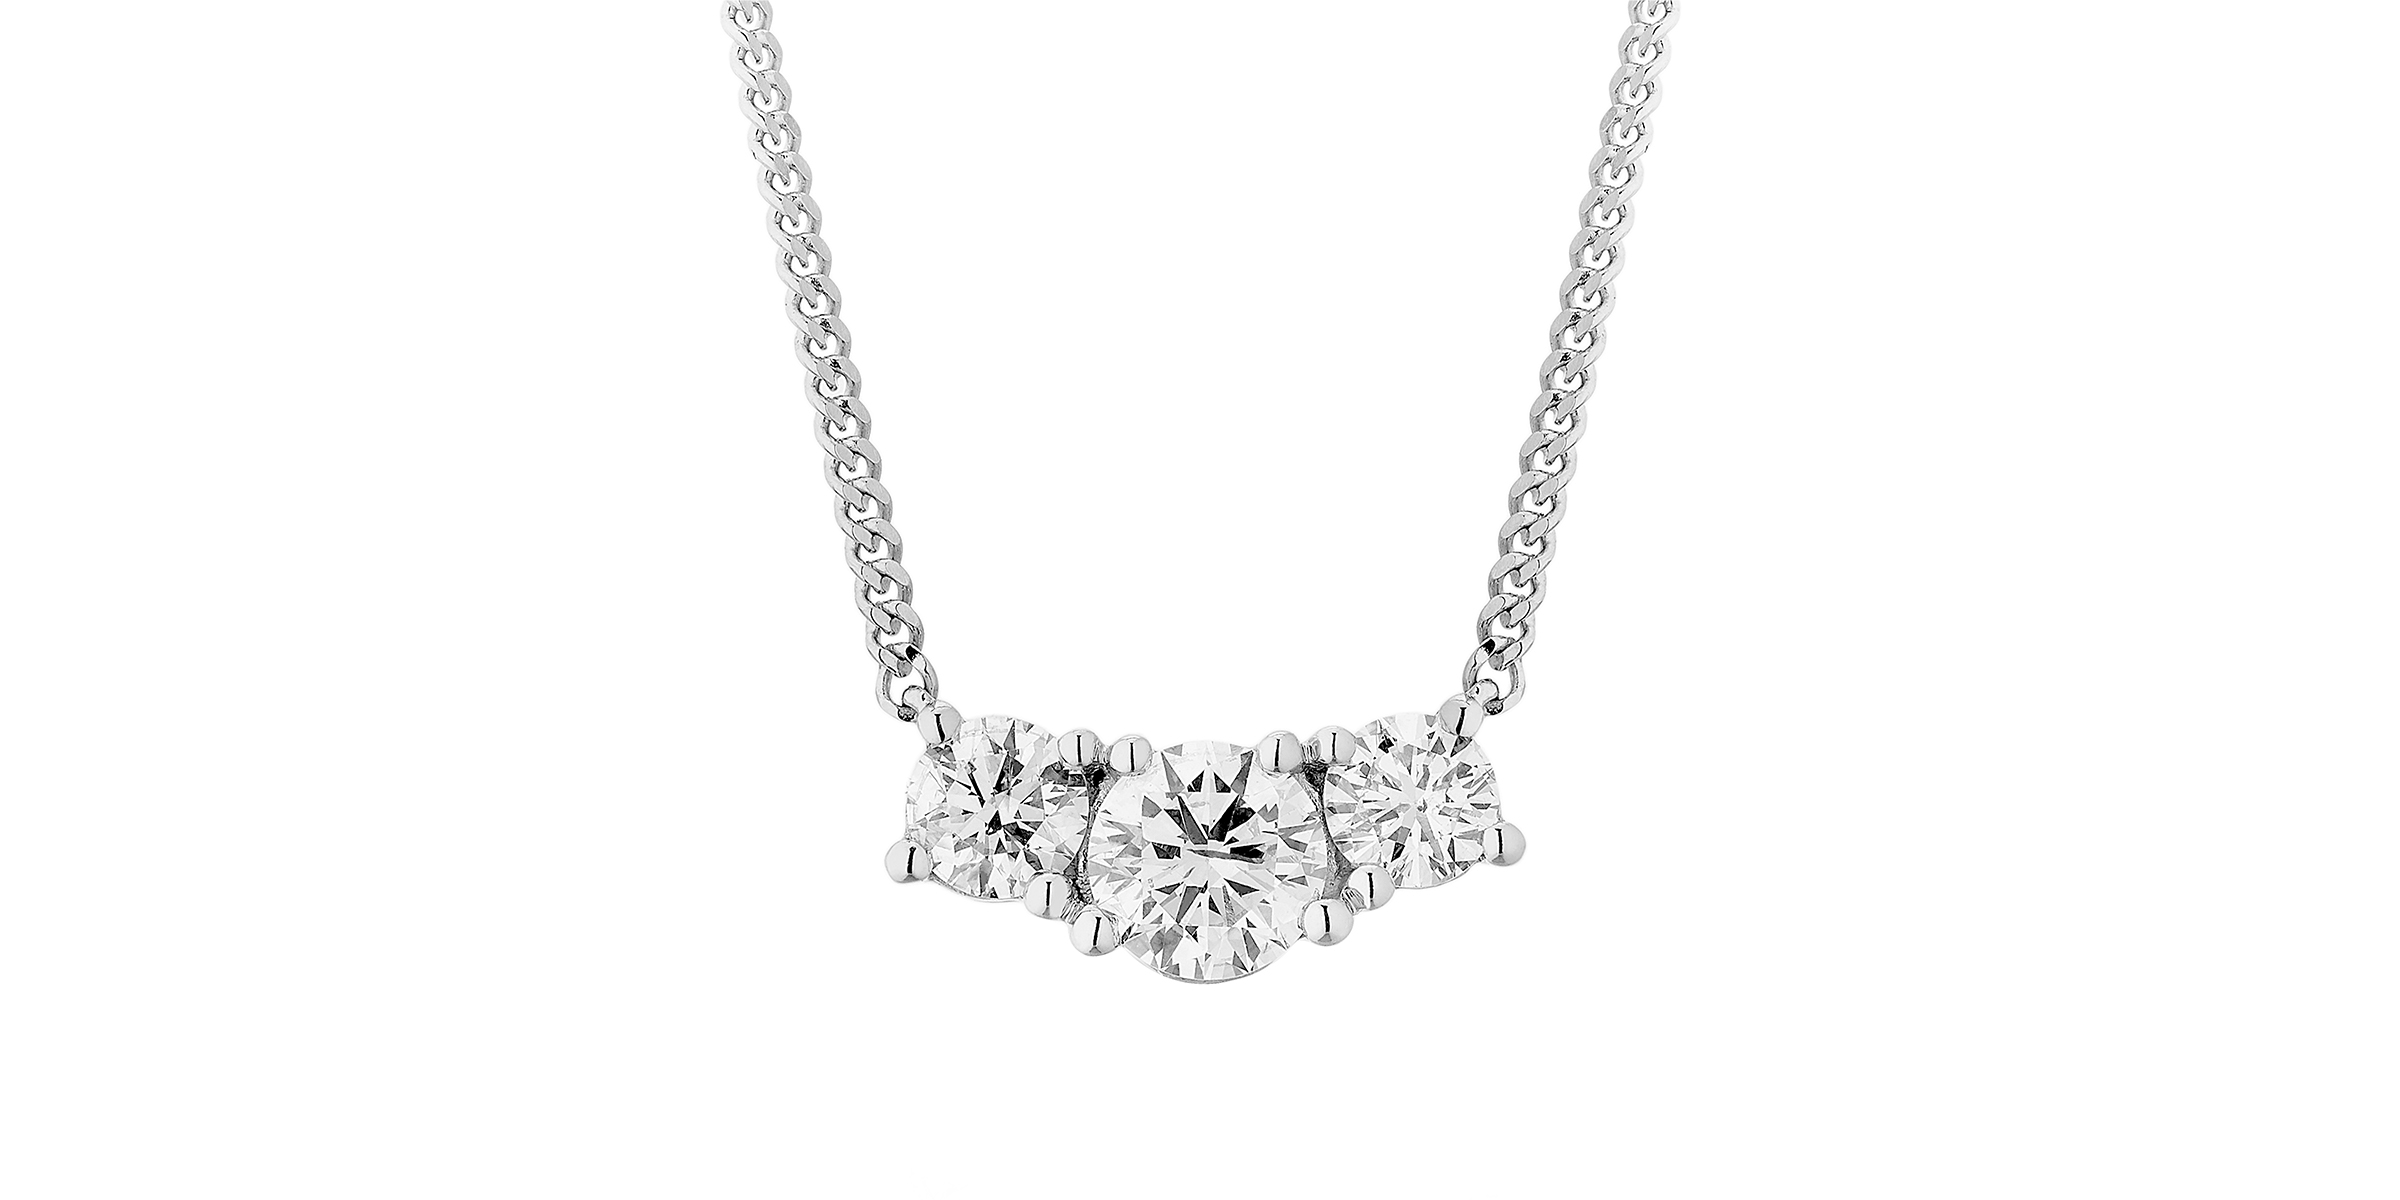 ERNEST JONES 9CT 375 White Gold Open Heart Necklace Earrings Set £90.00 -  PicClick UK